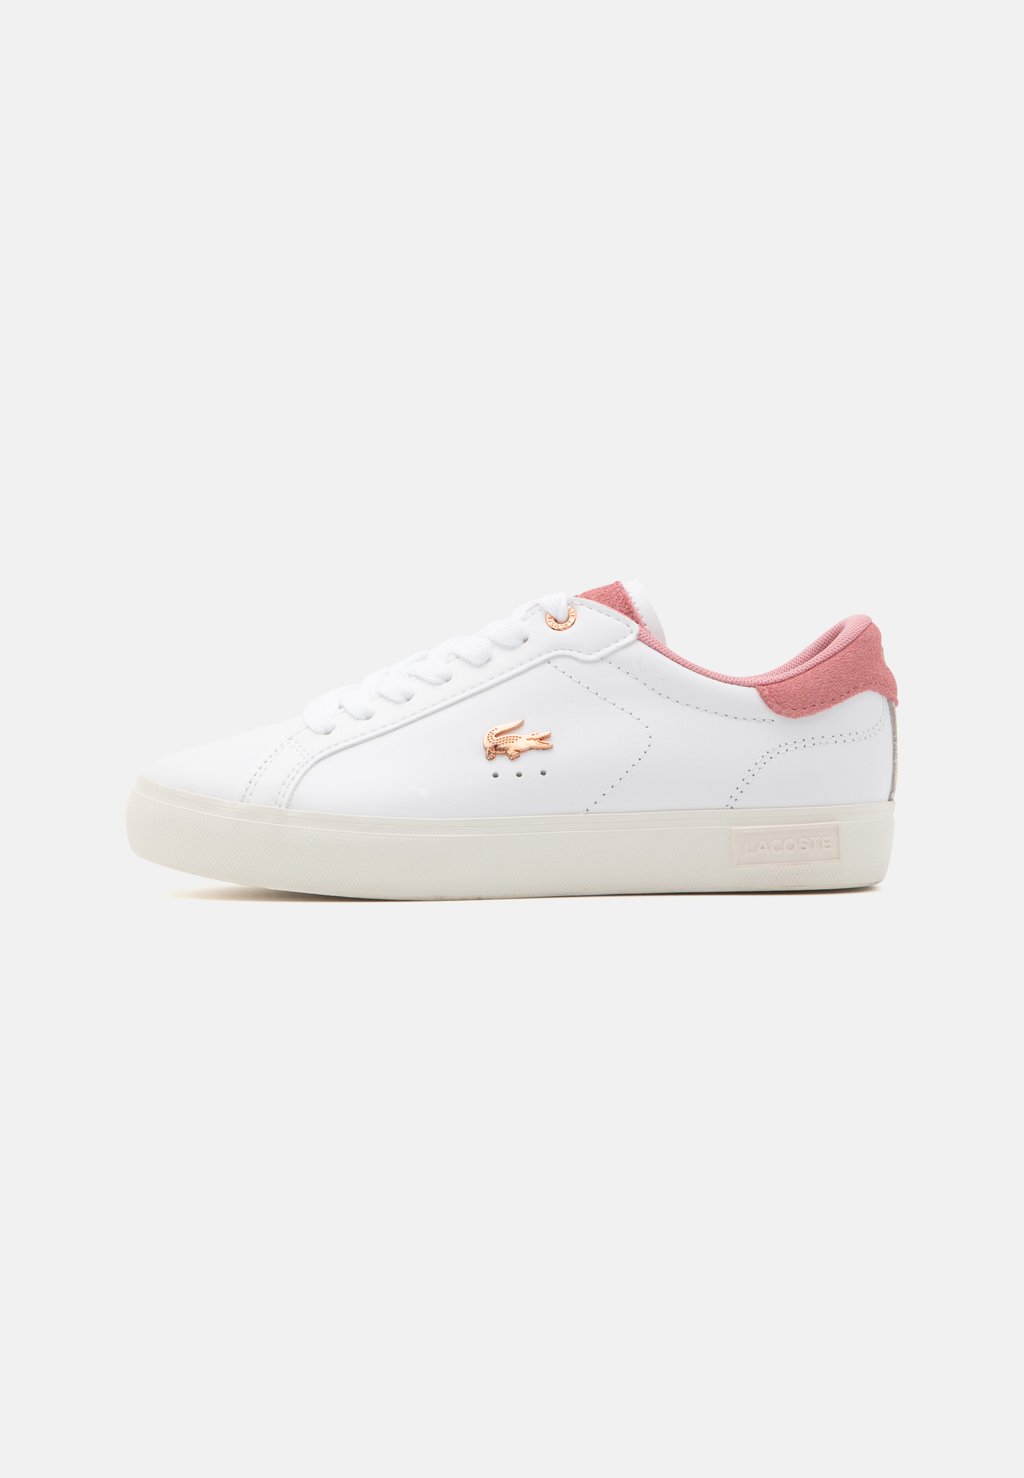 Низкие кроссовки Powercourt Lacoste, цвет white/light pink низкие кроссовки ziane platform lacoste цвет white light pink